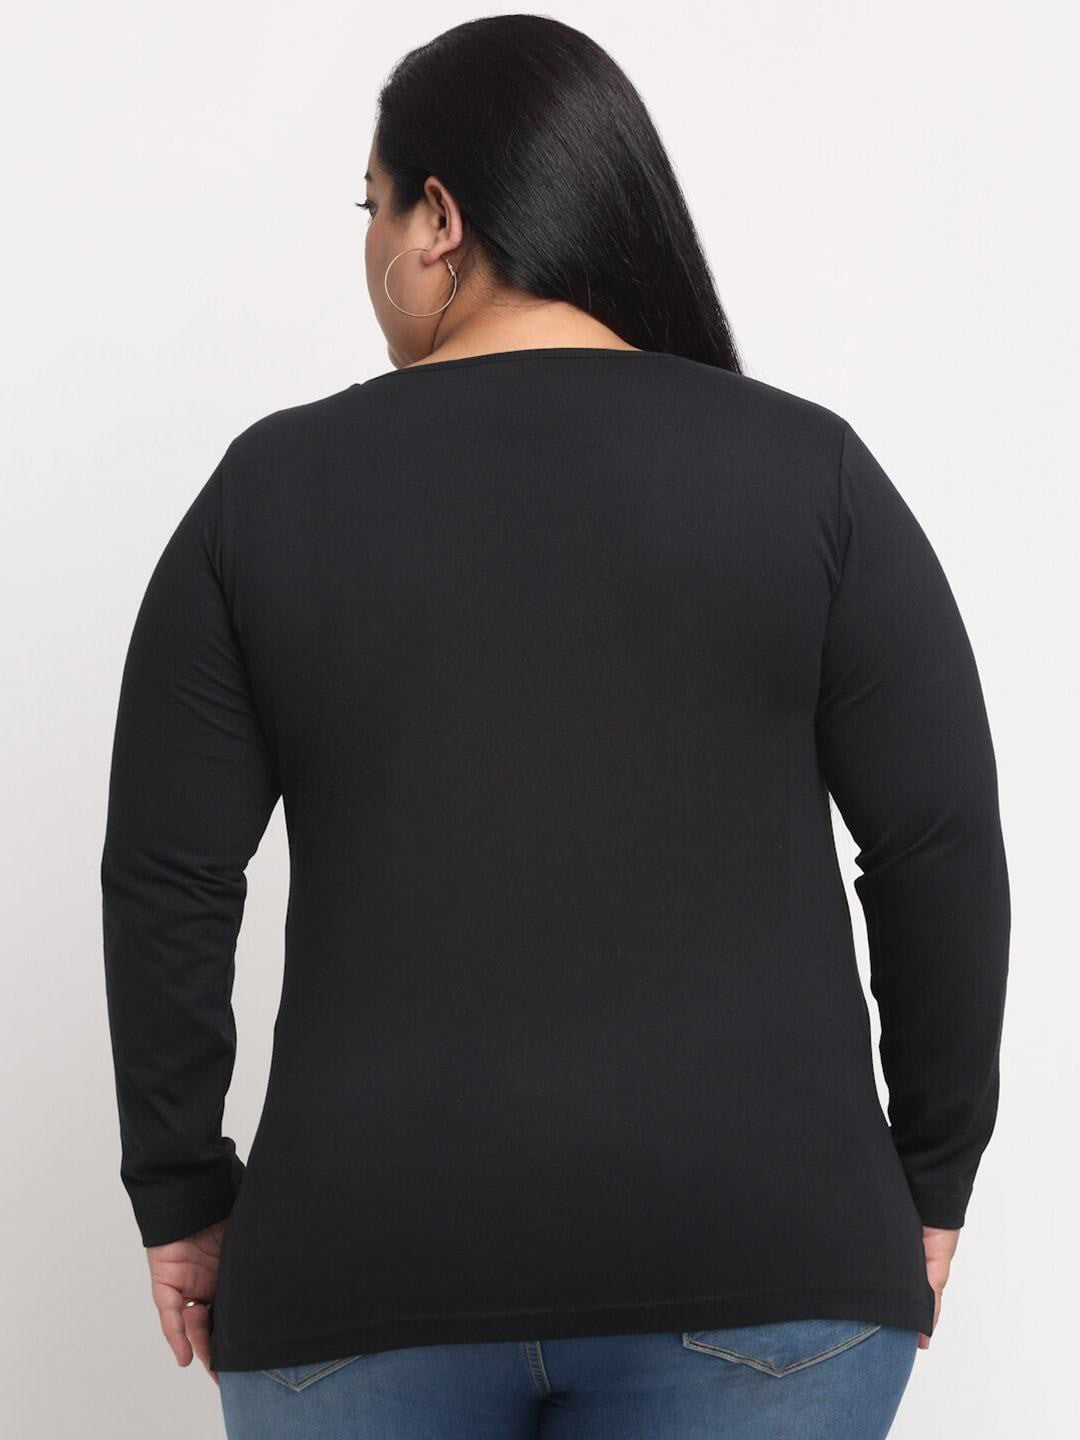 plusS Plus Size Women Black T-shirt